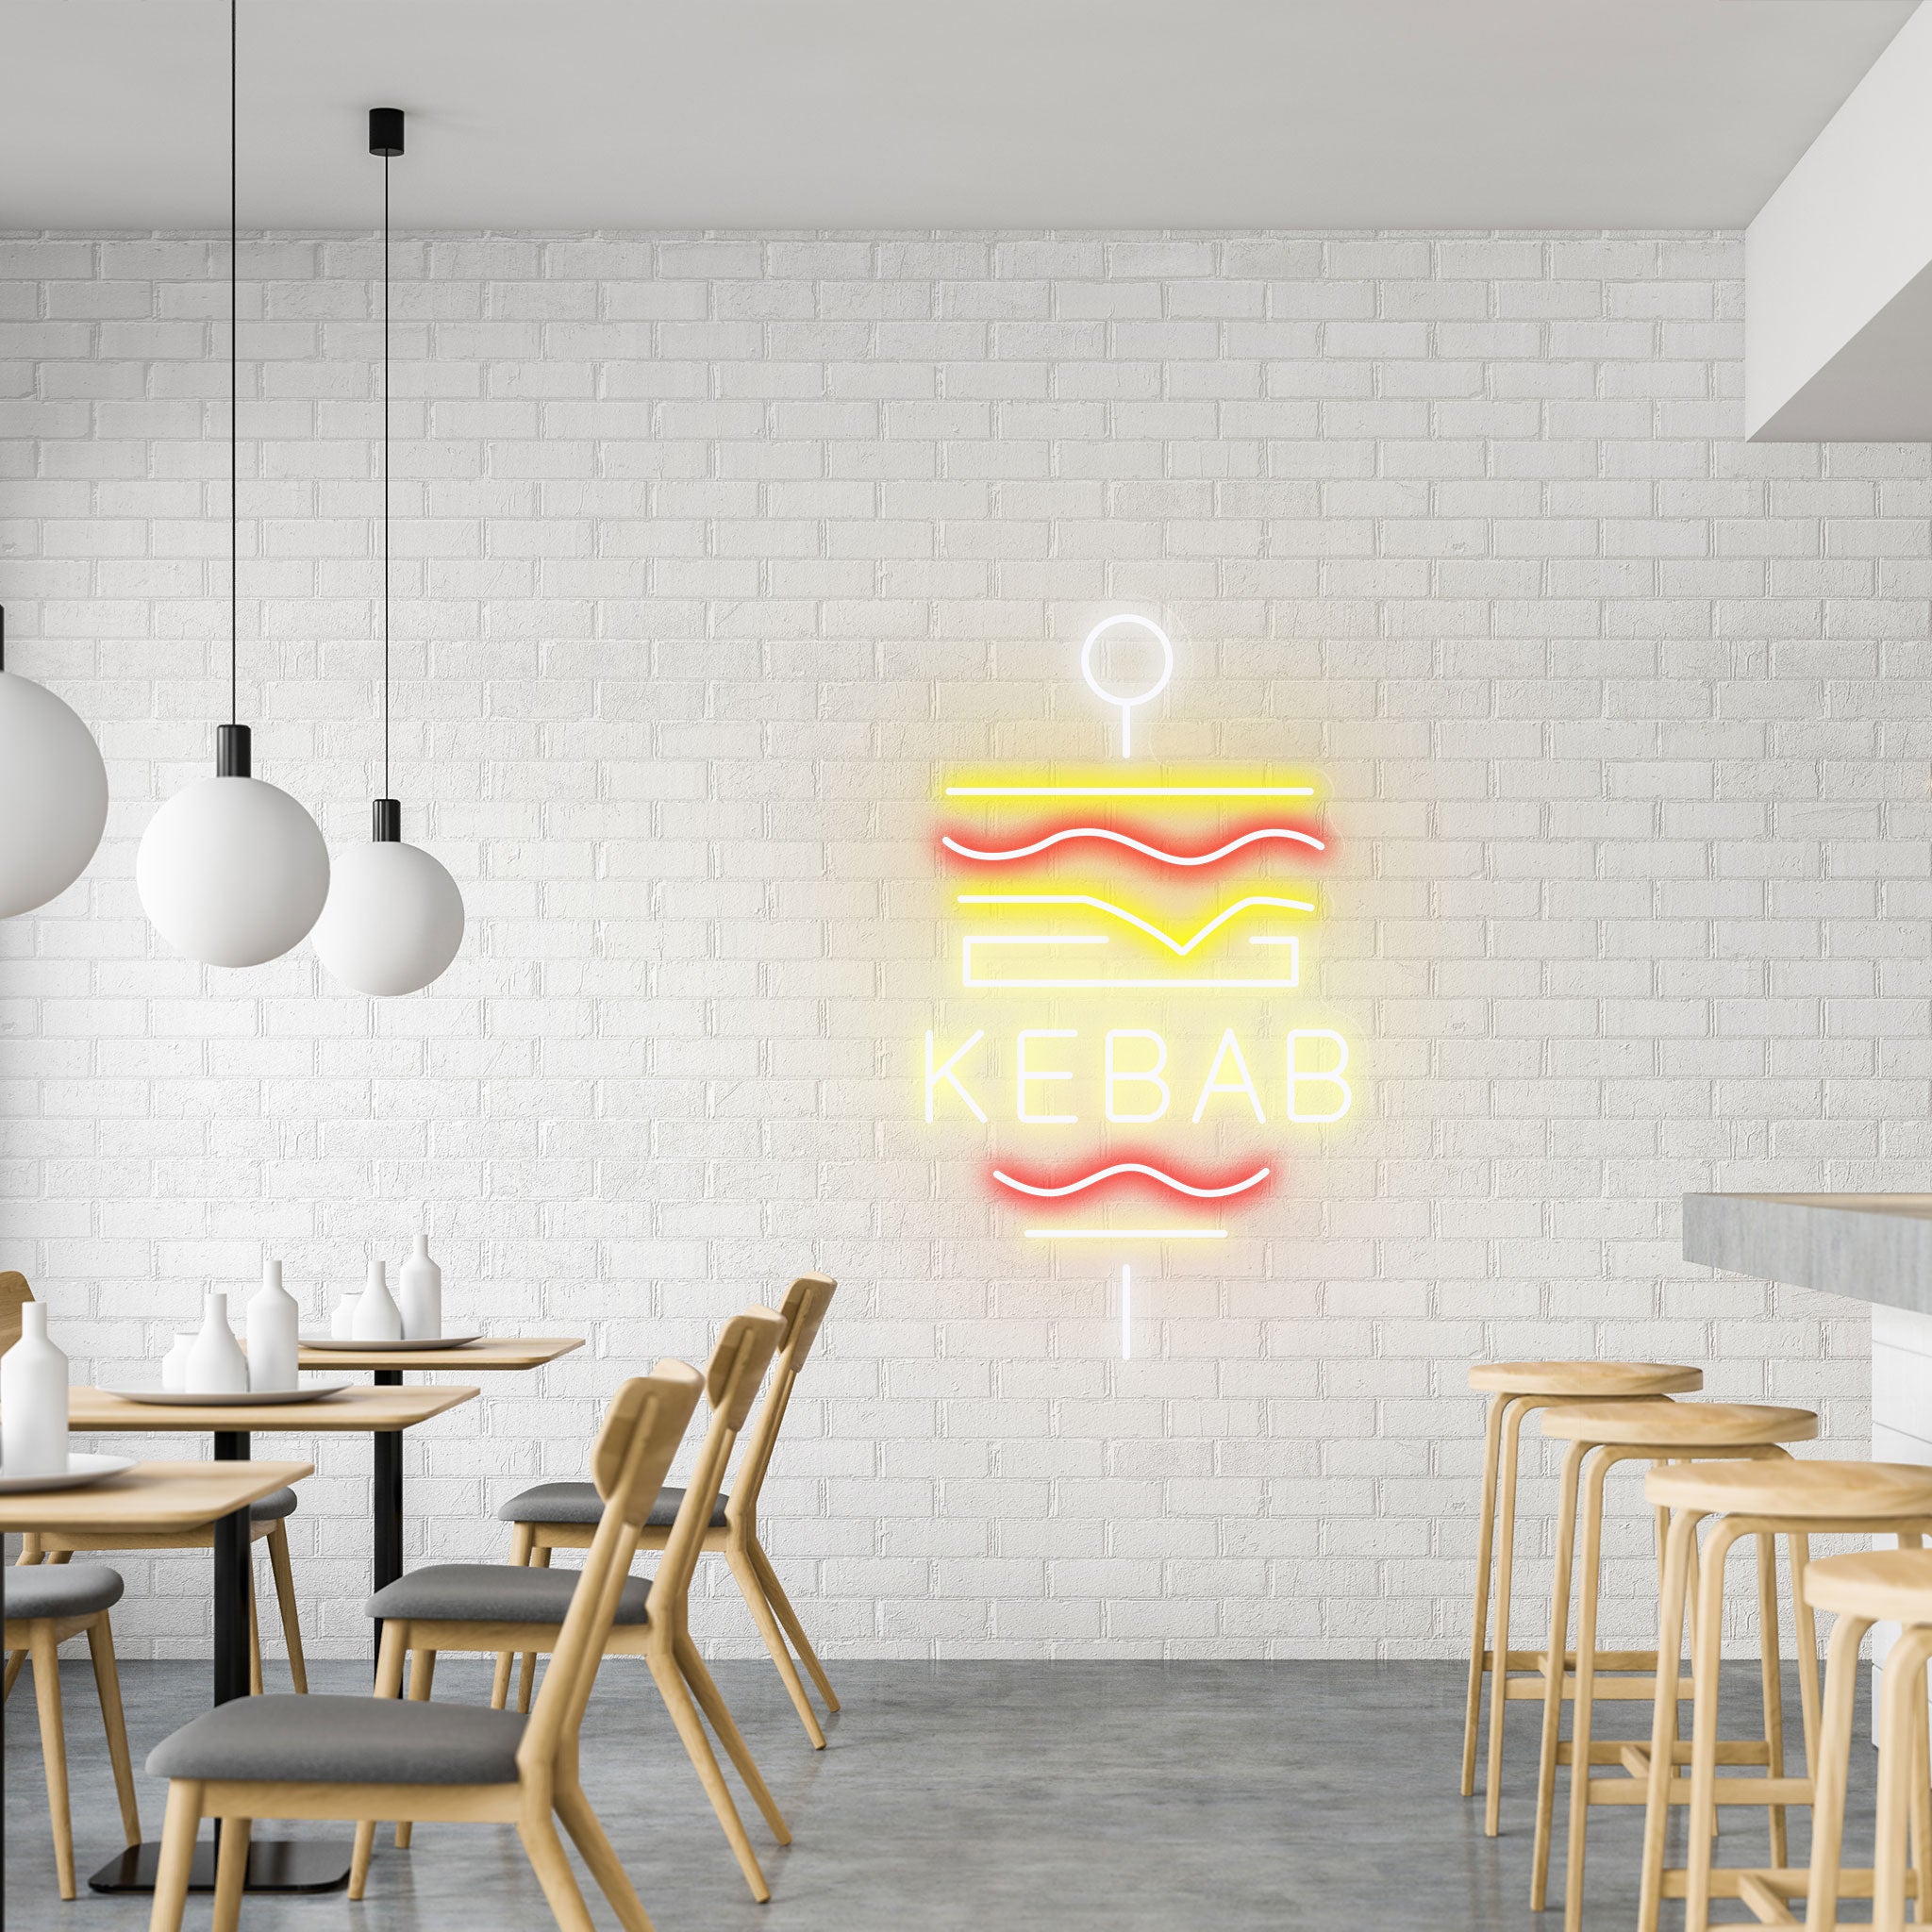 Kebab - Neon Sign - Restaurant Venue